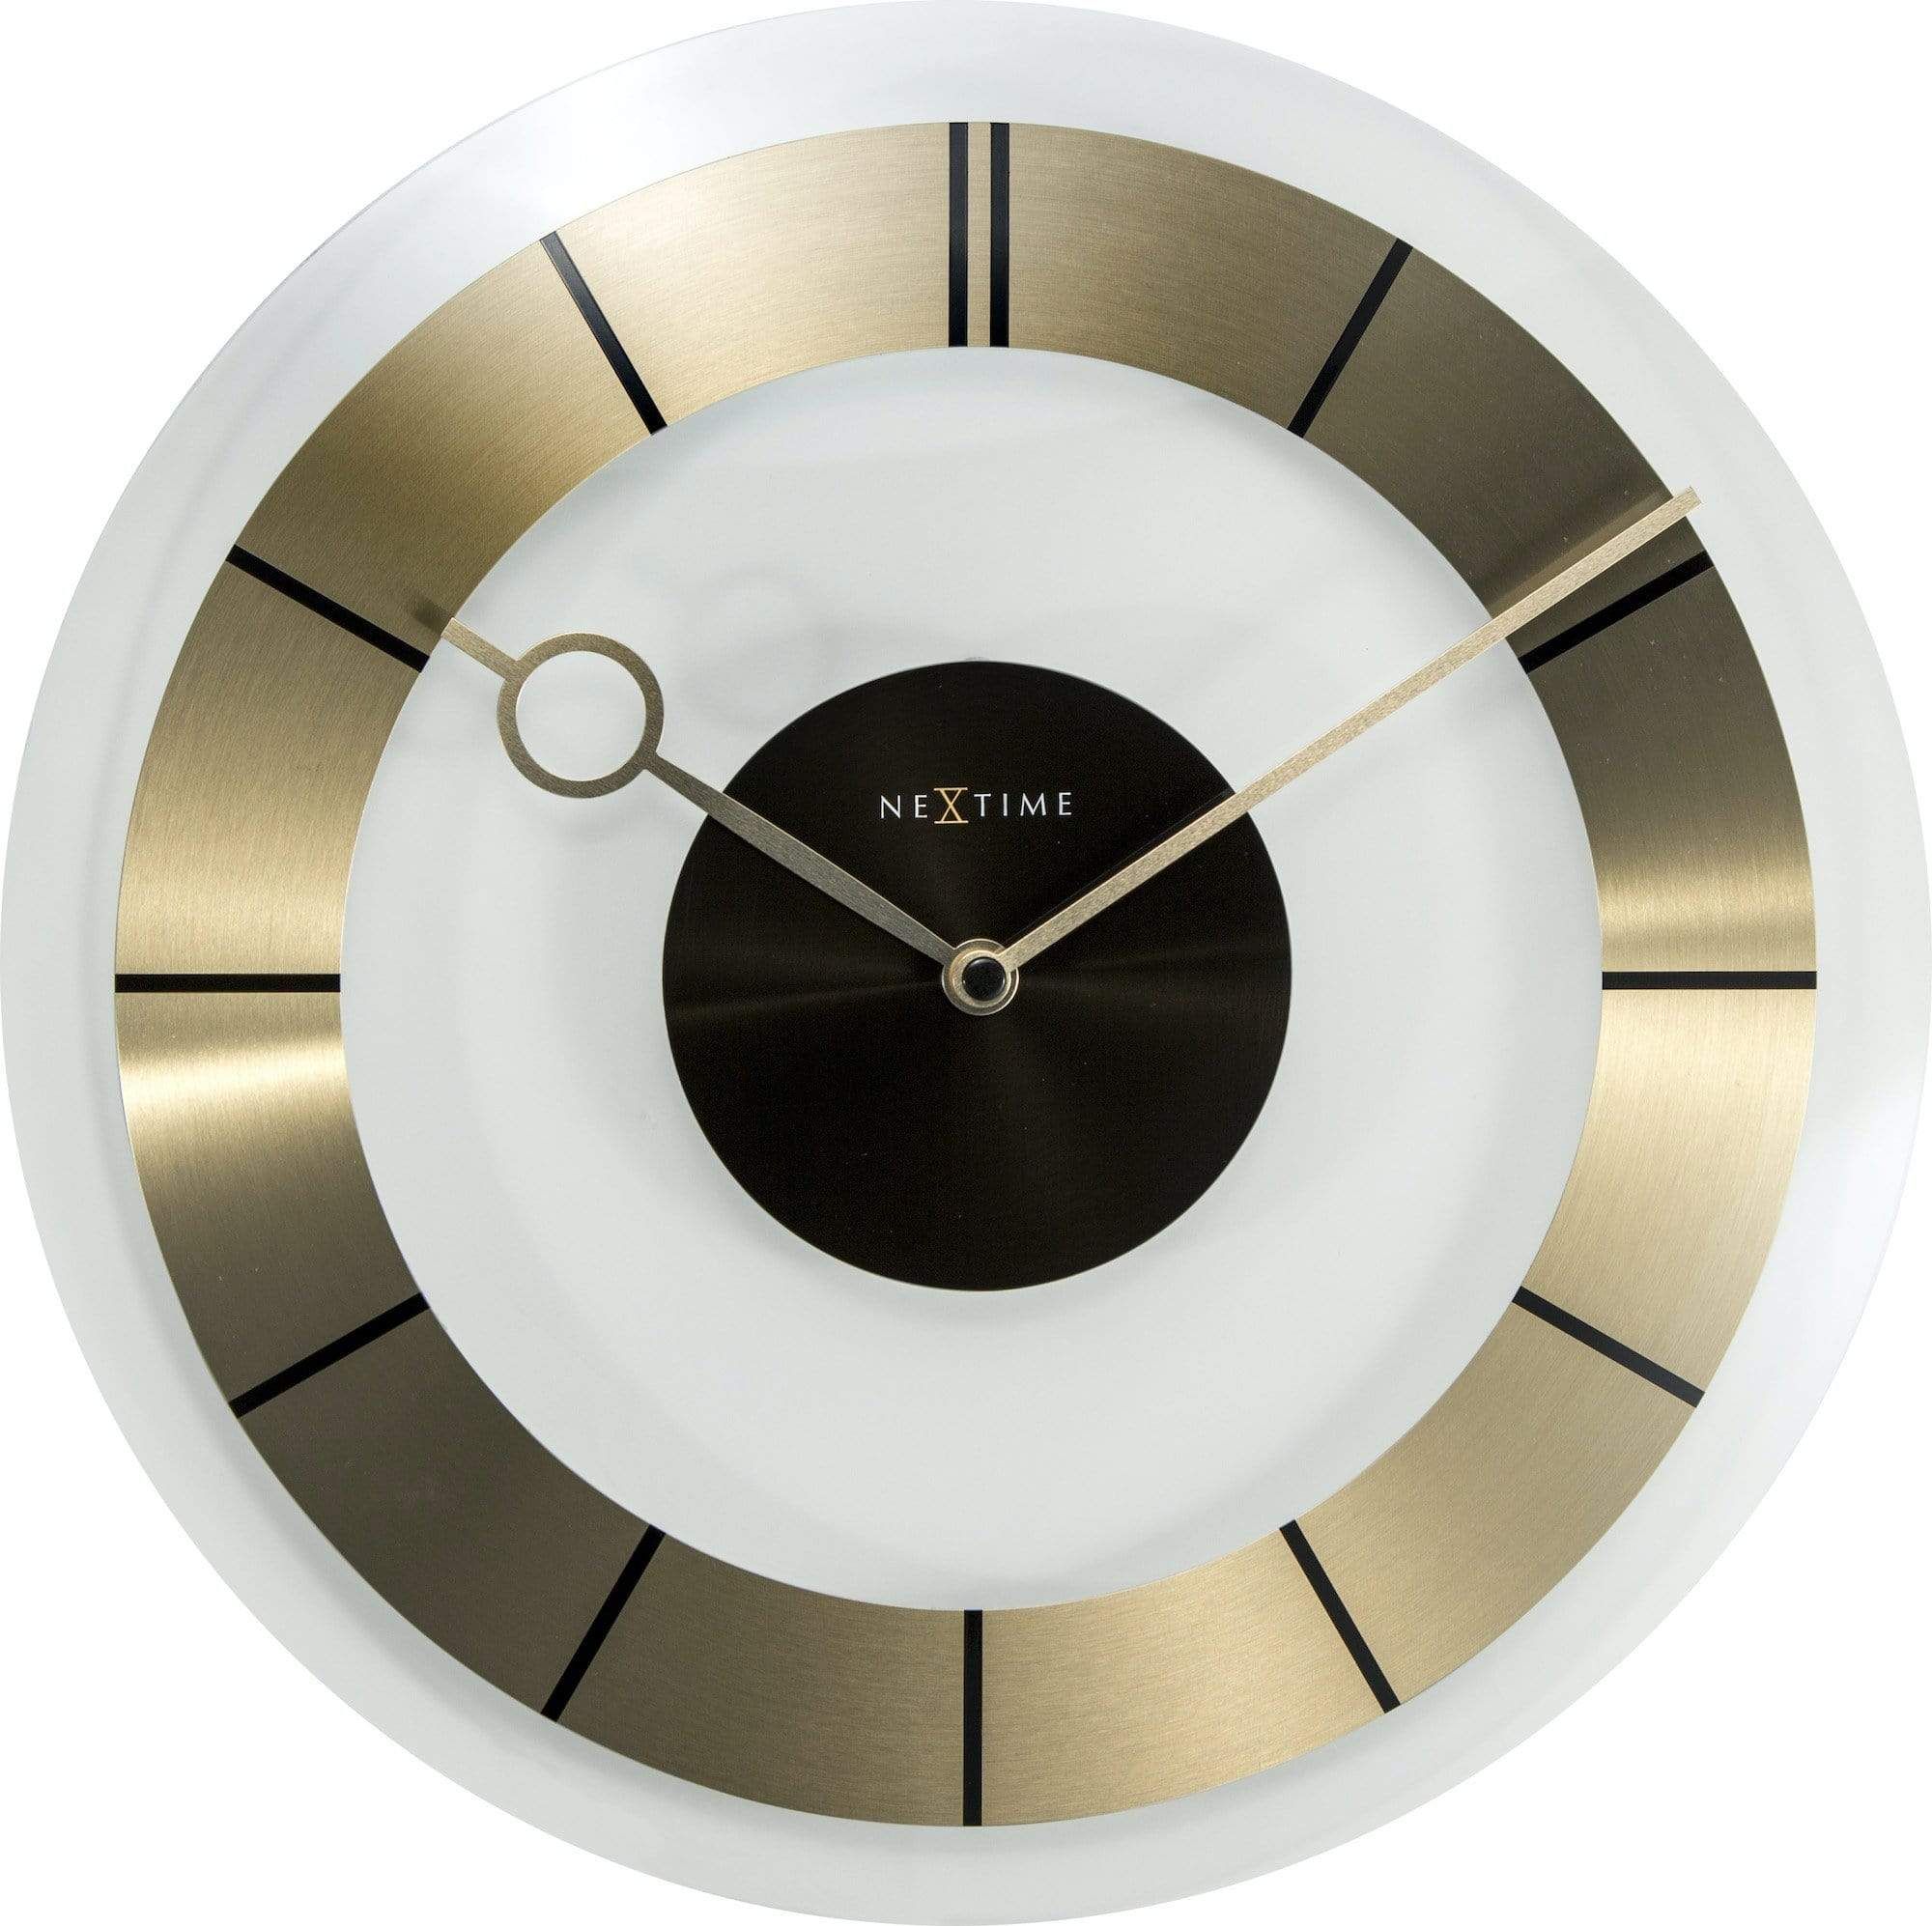 Timeless Sophistication: Trendy Black Clocks for Every Room